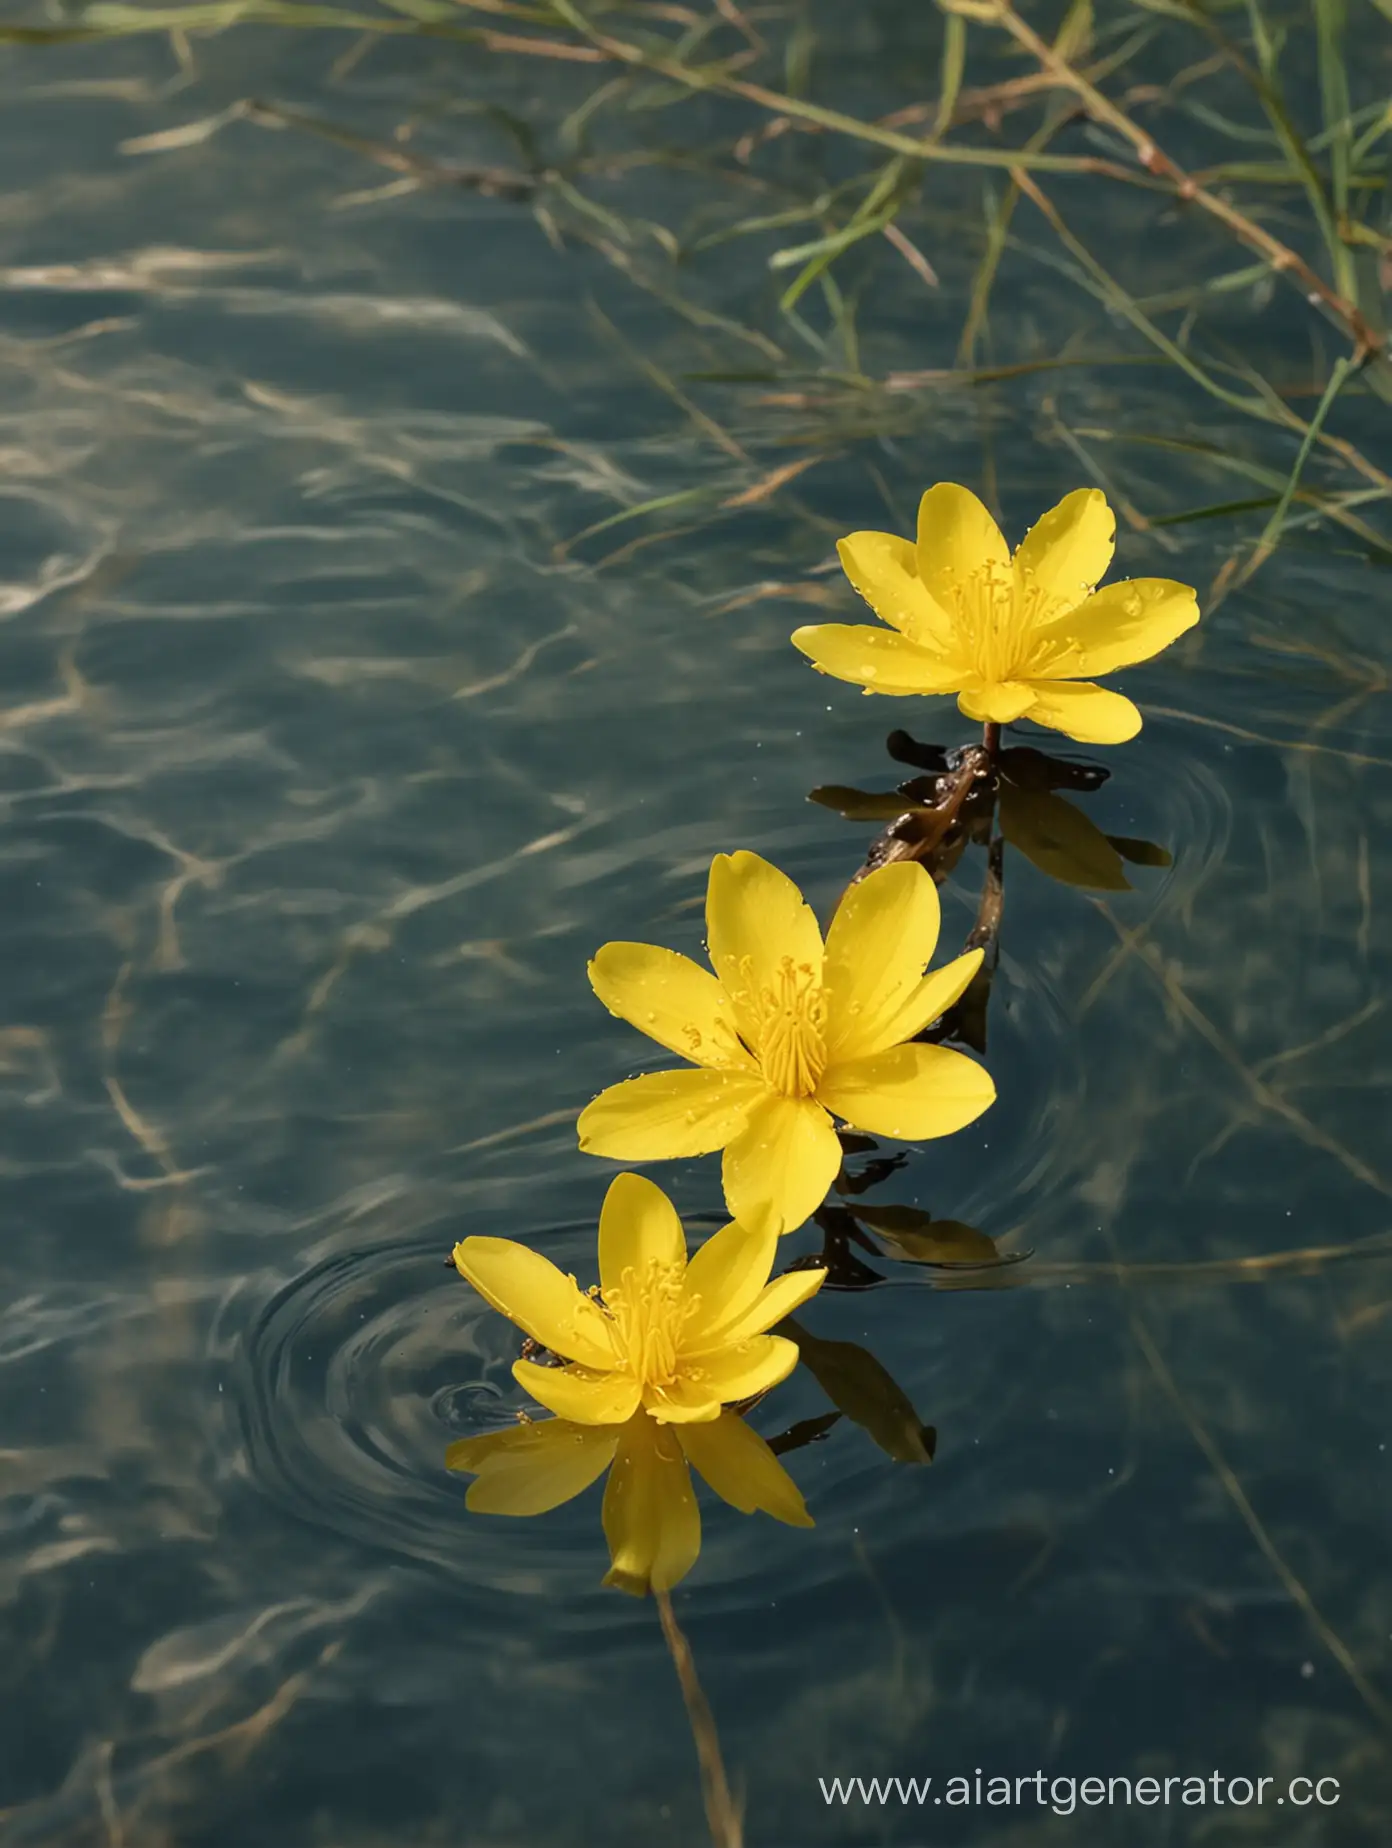 Acacia-Yellow-Flower-CloseUp-8K-in-Water